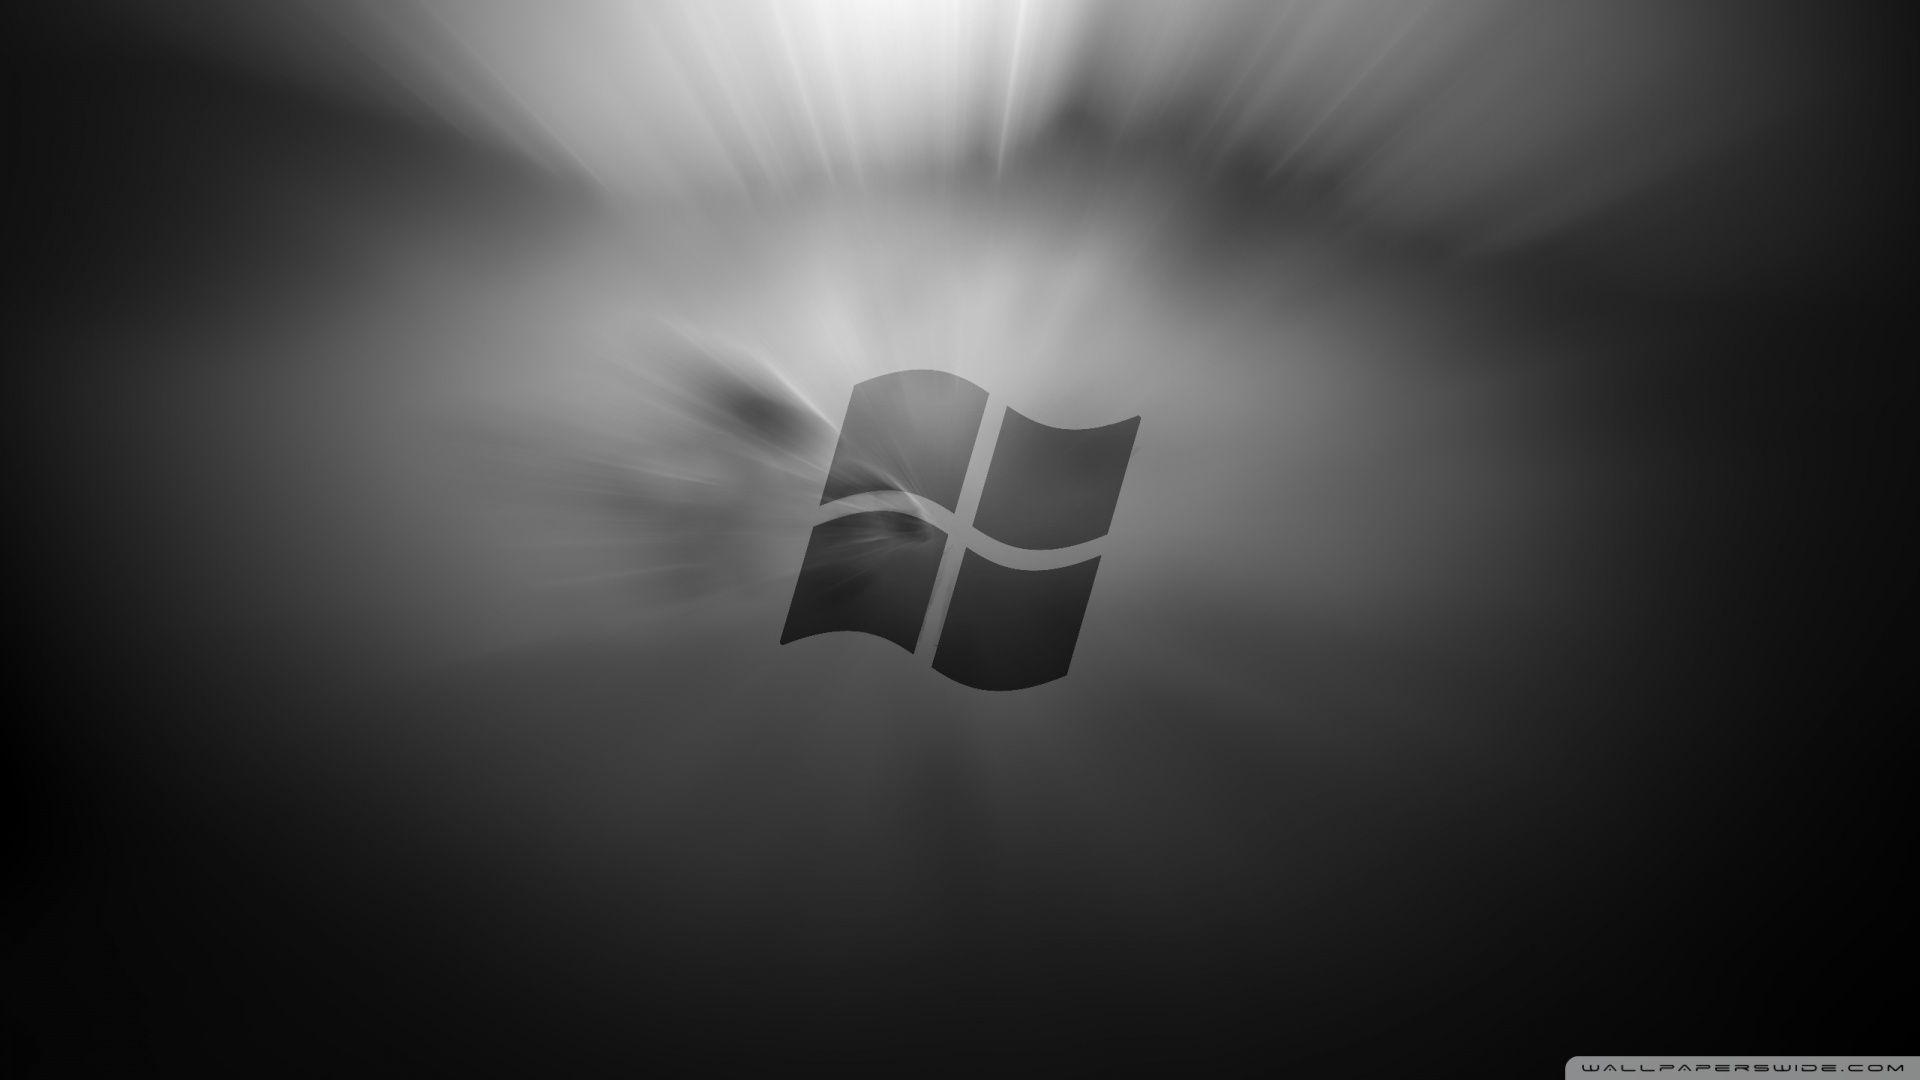 Windows 8 Black Wallpapers Wallpaper Cave